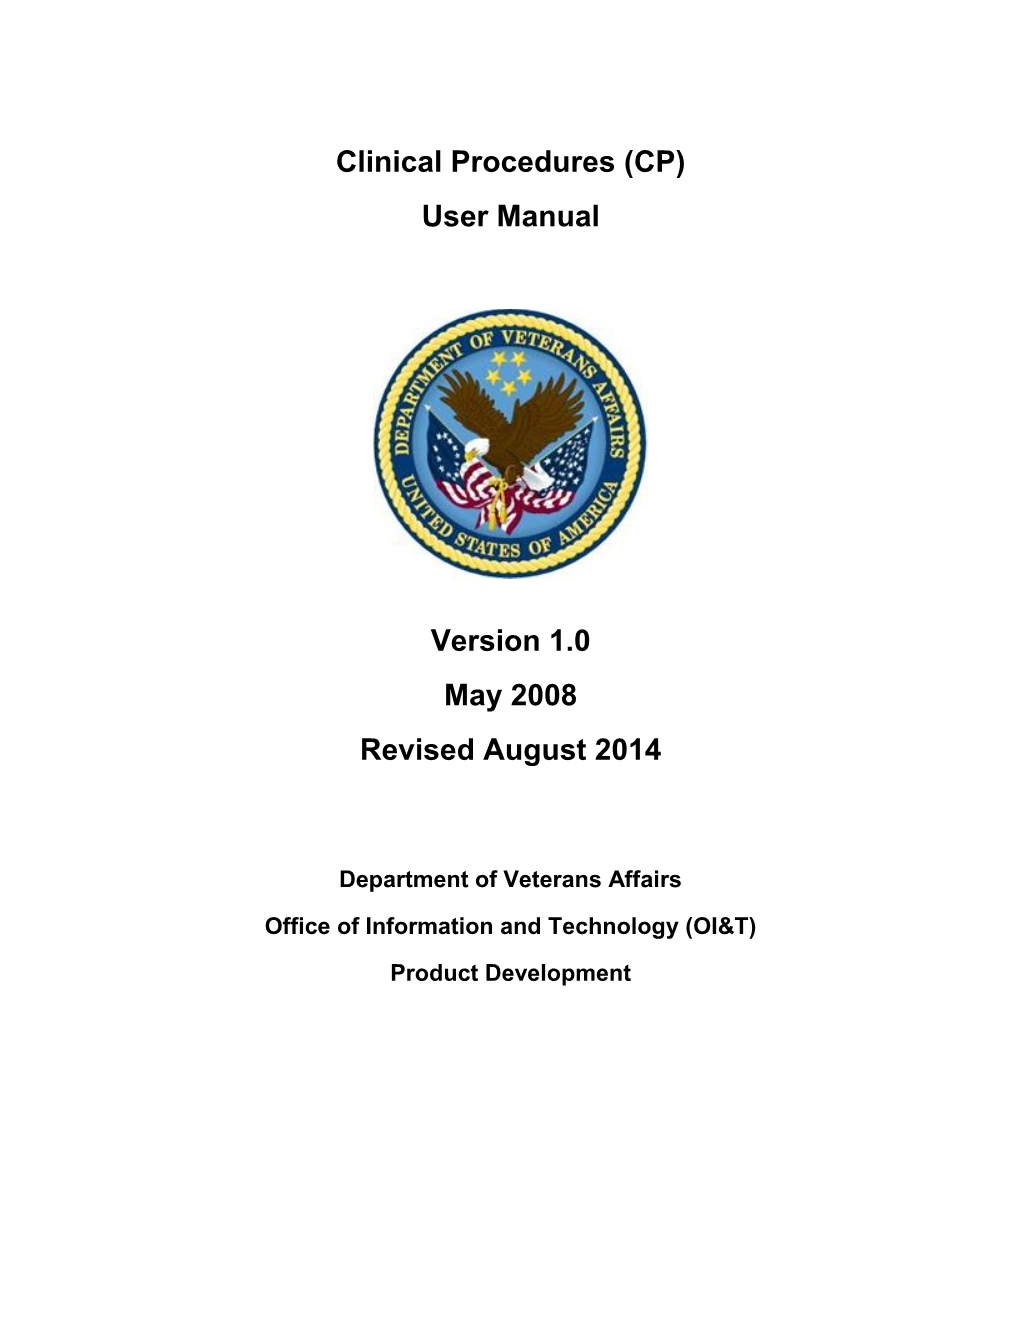 Clinical Proedures User Manual